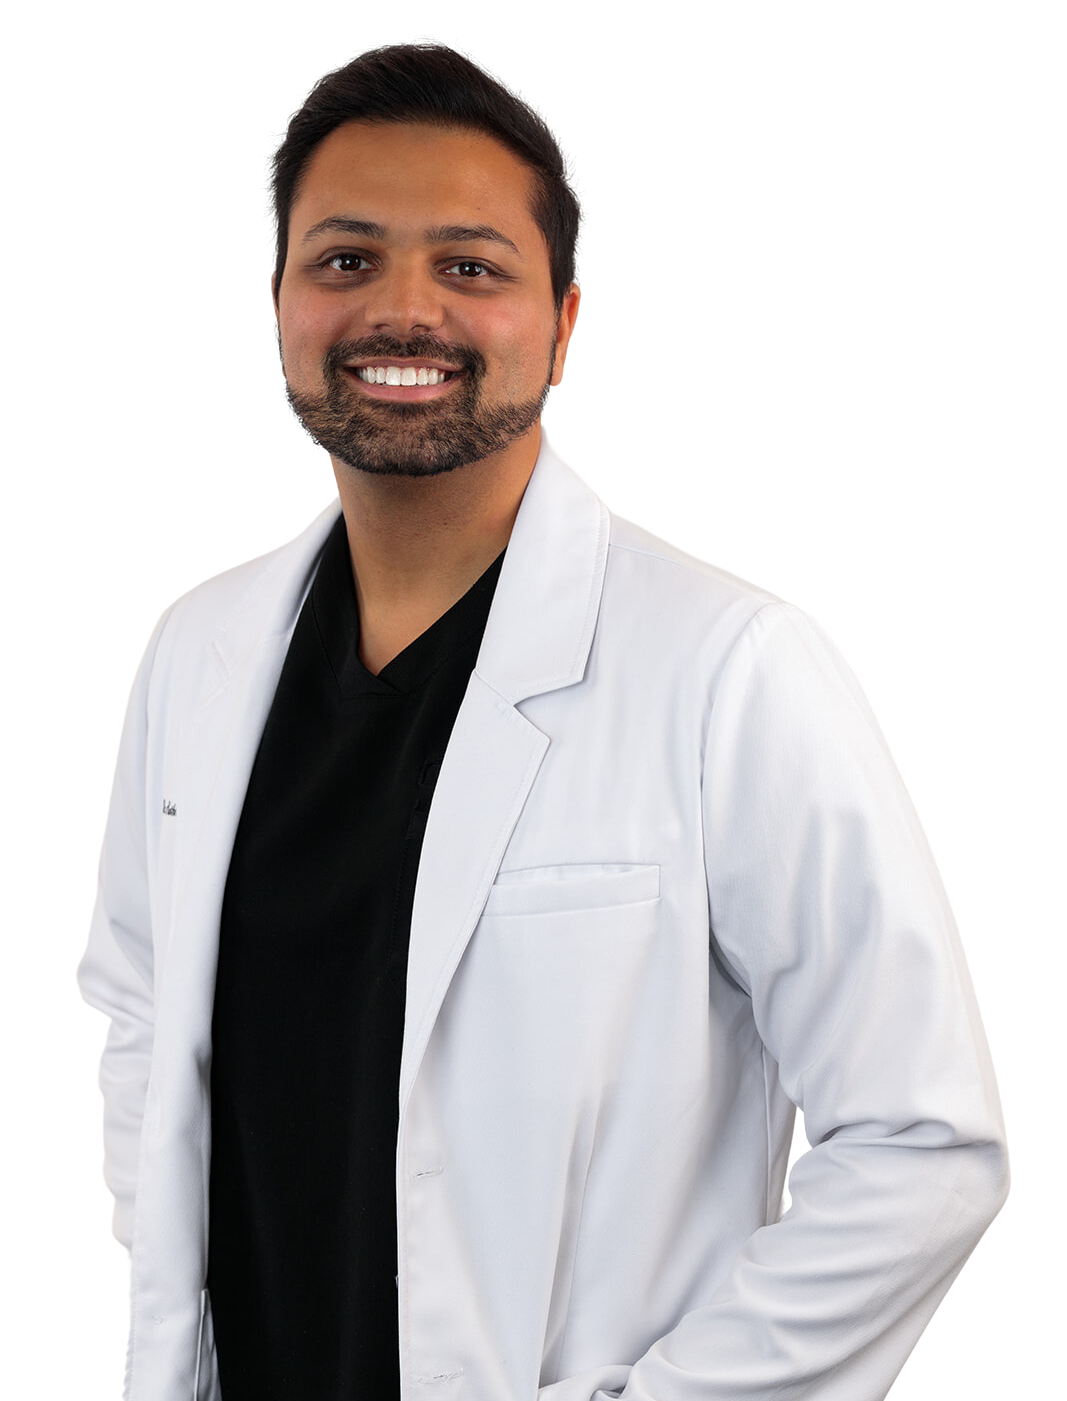 Meet the Doctor - Dr. Satbir Khara